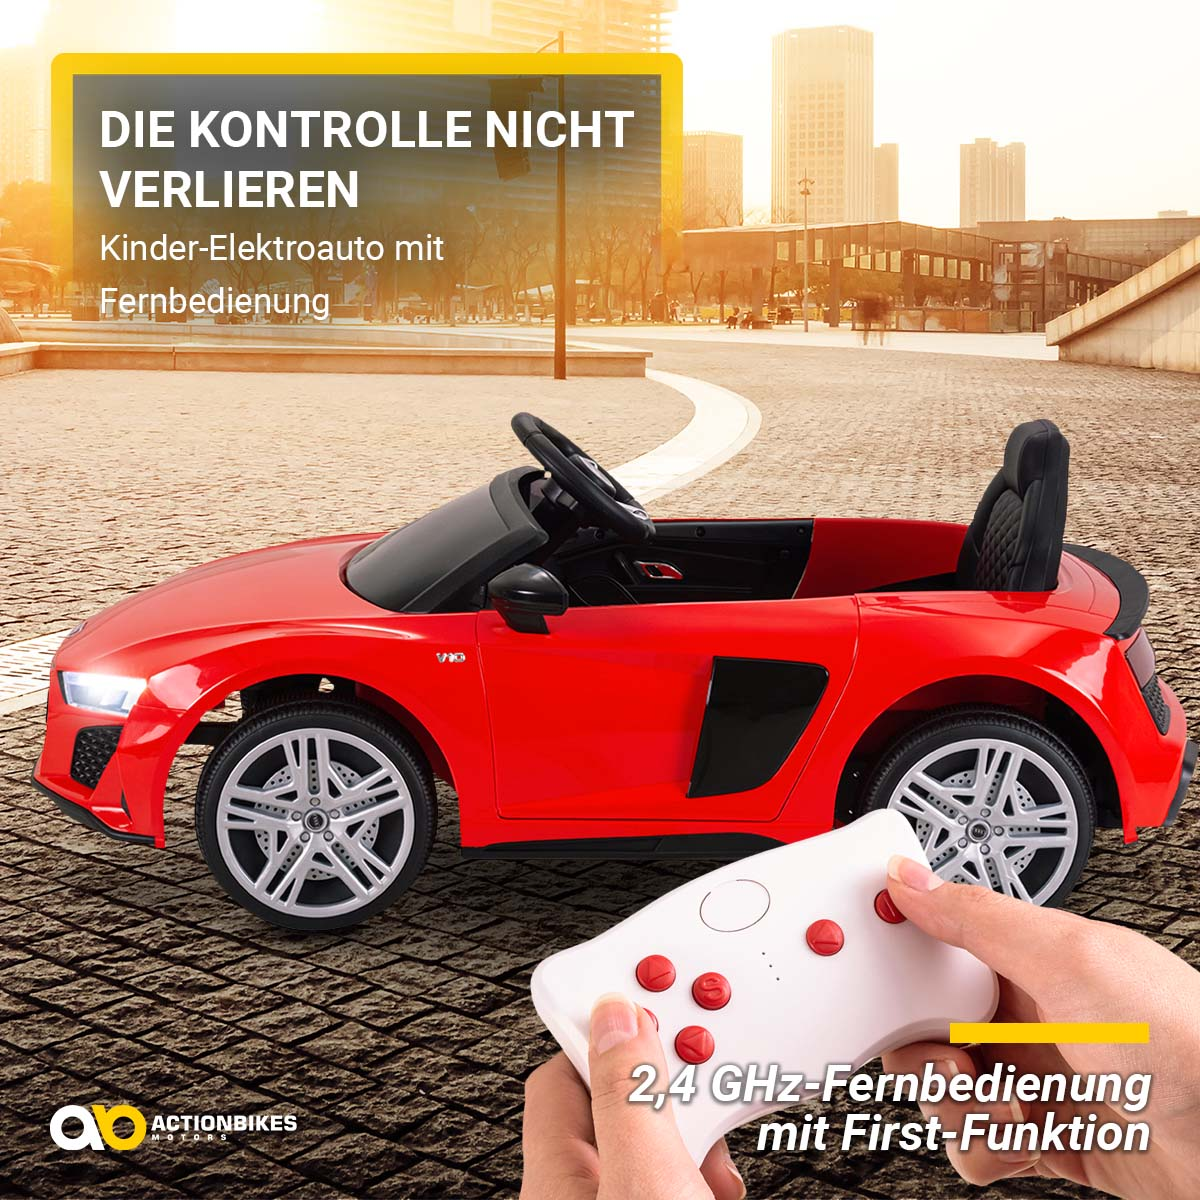 ACTIONBIKES MOTORS Audi R8 4S Spyder Elektroauto Lizenziert